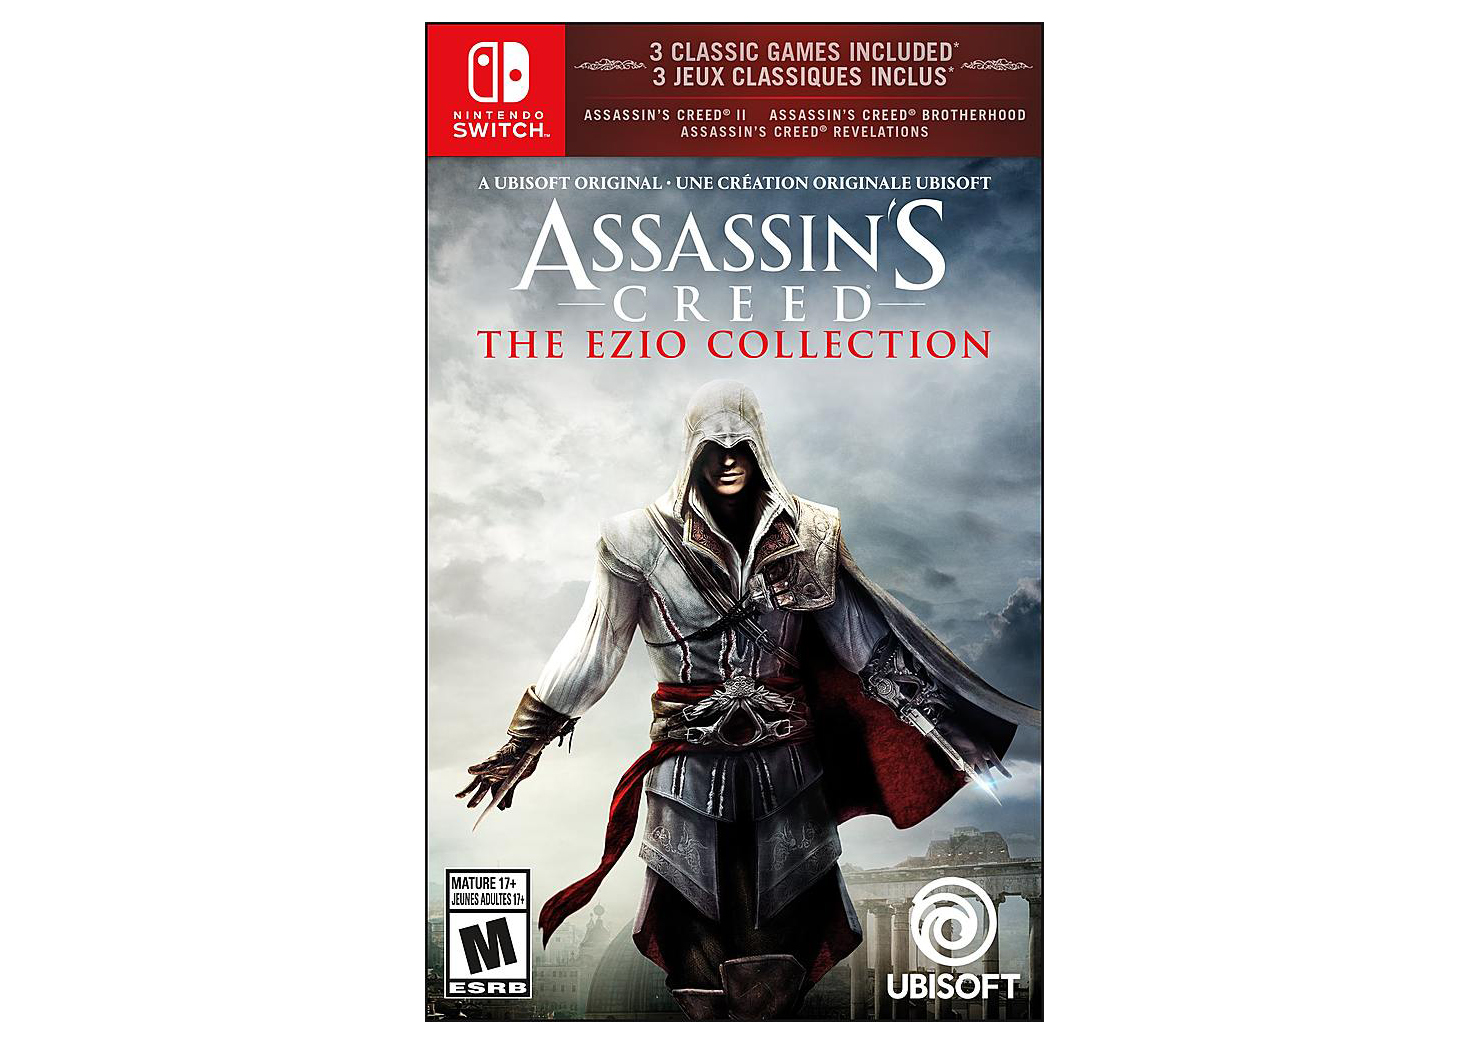 Ubisoft Nintento Switch/OLED Assassin's Creed The Ezio Collection 